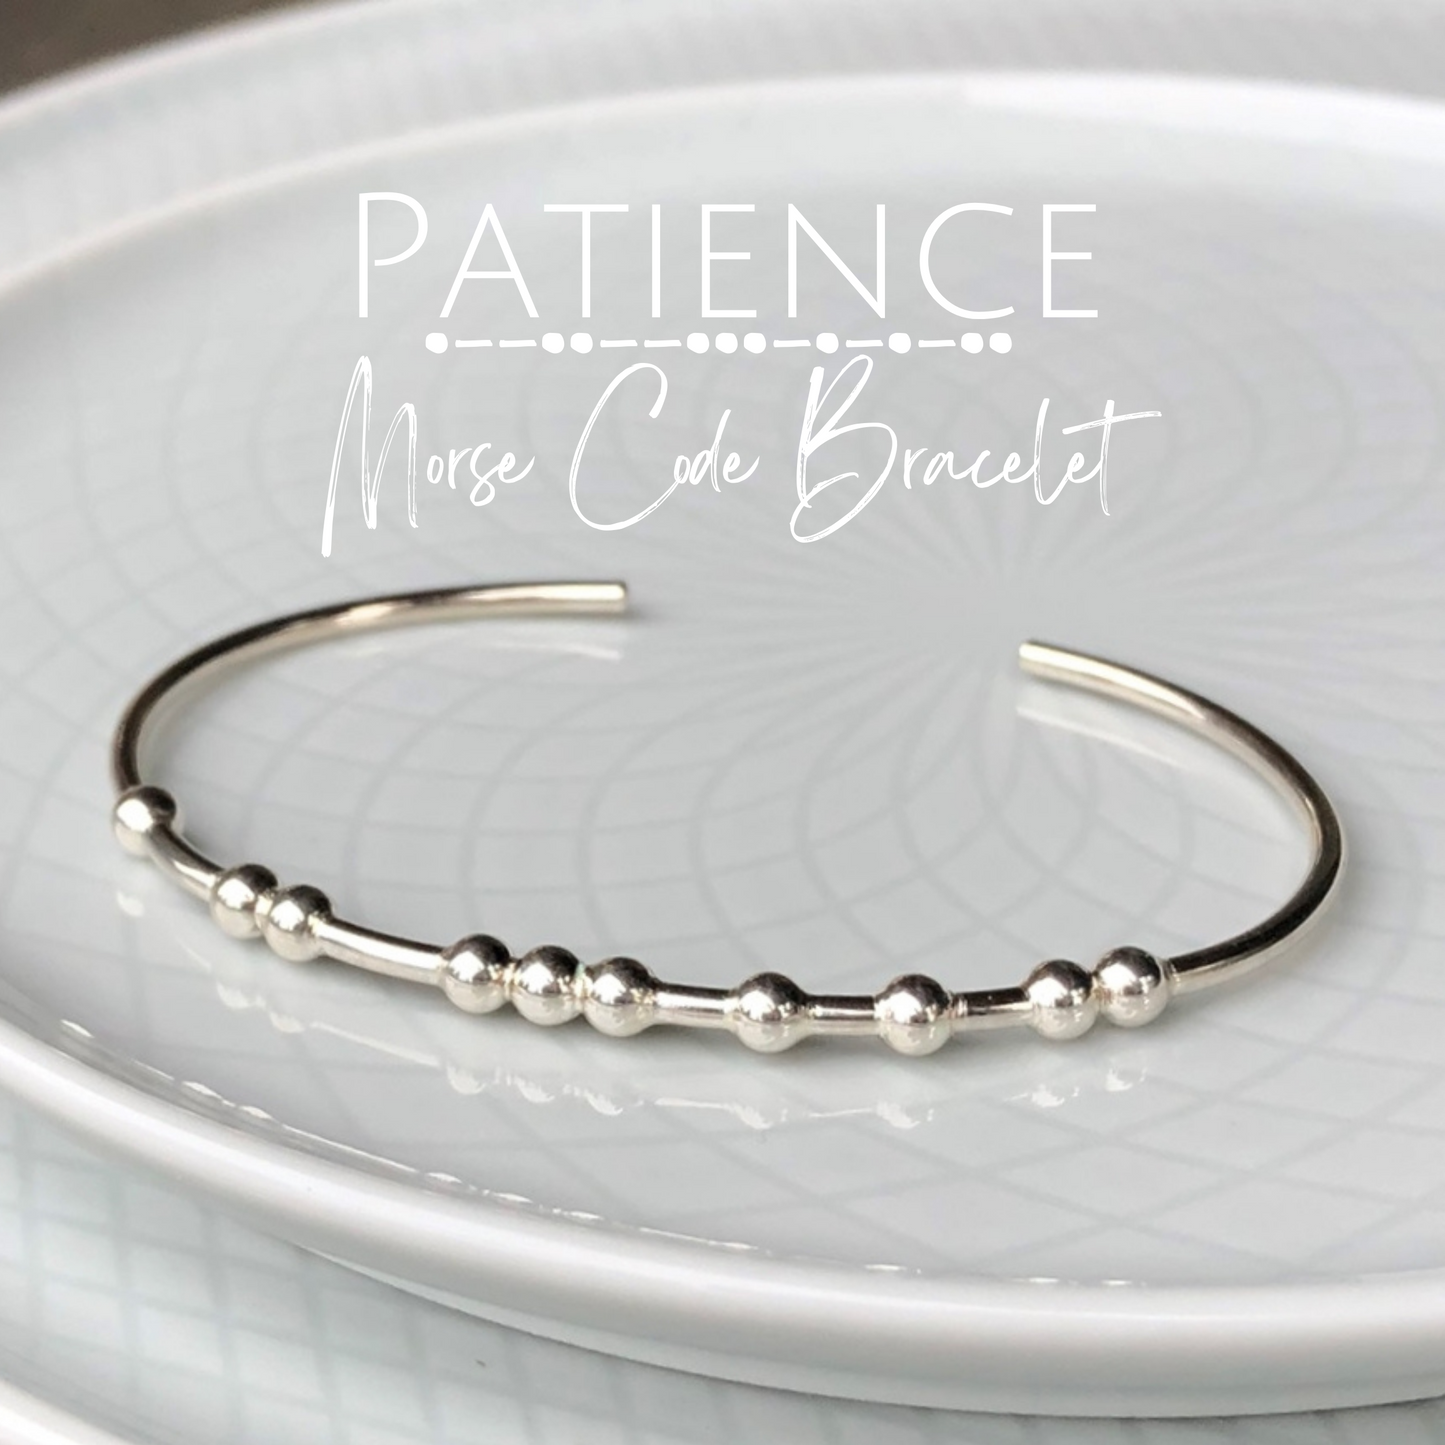 Patience Morse Code bracelet